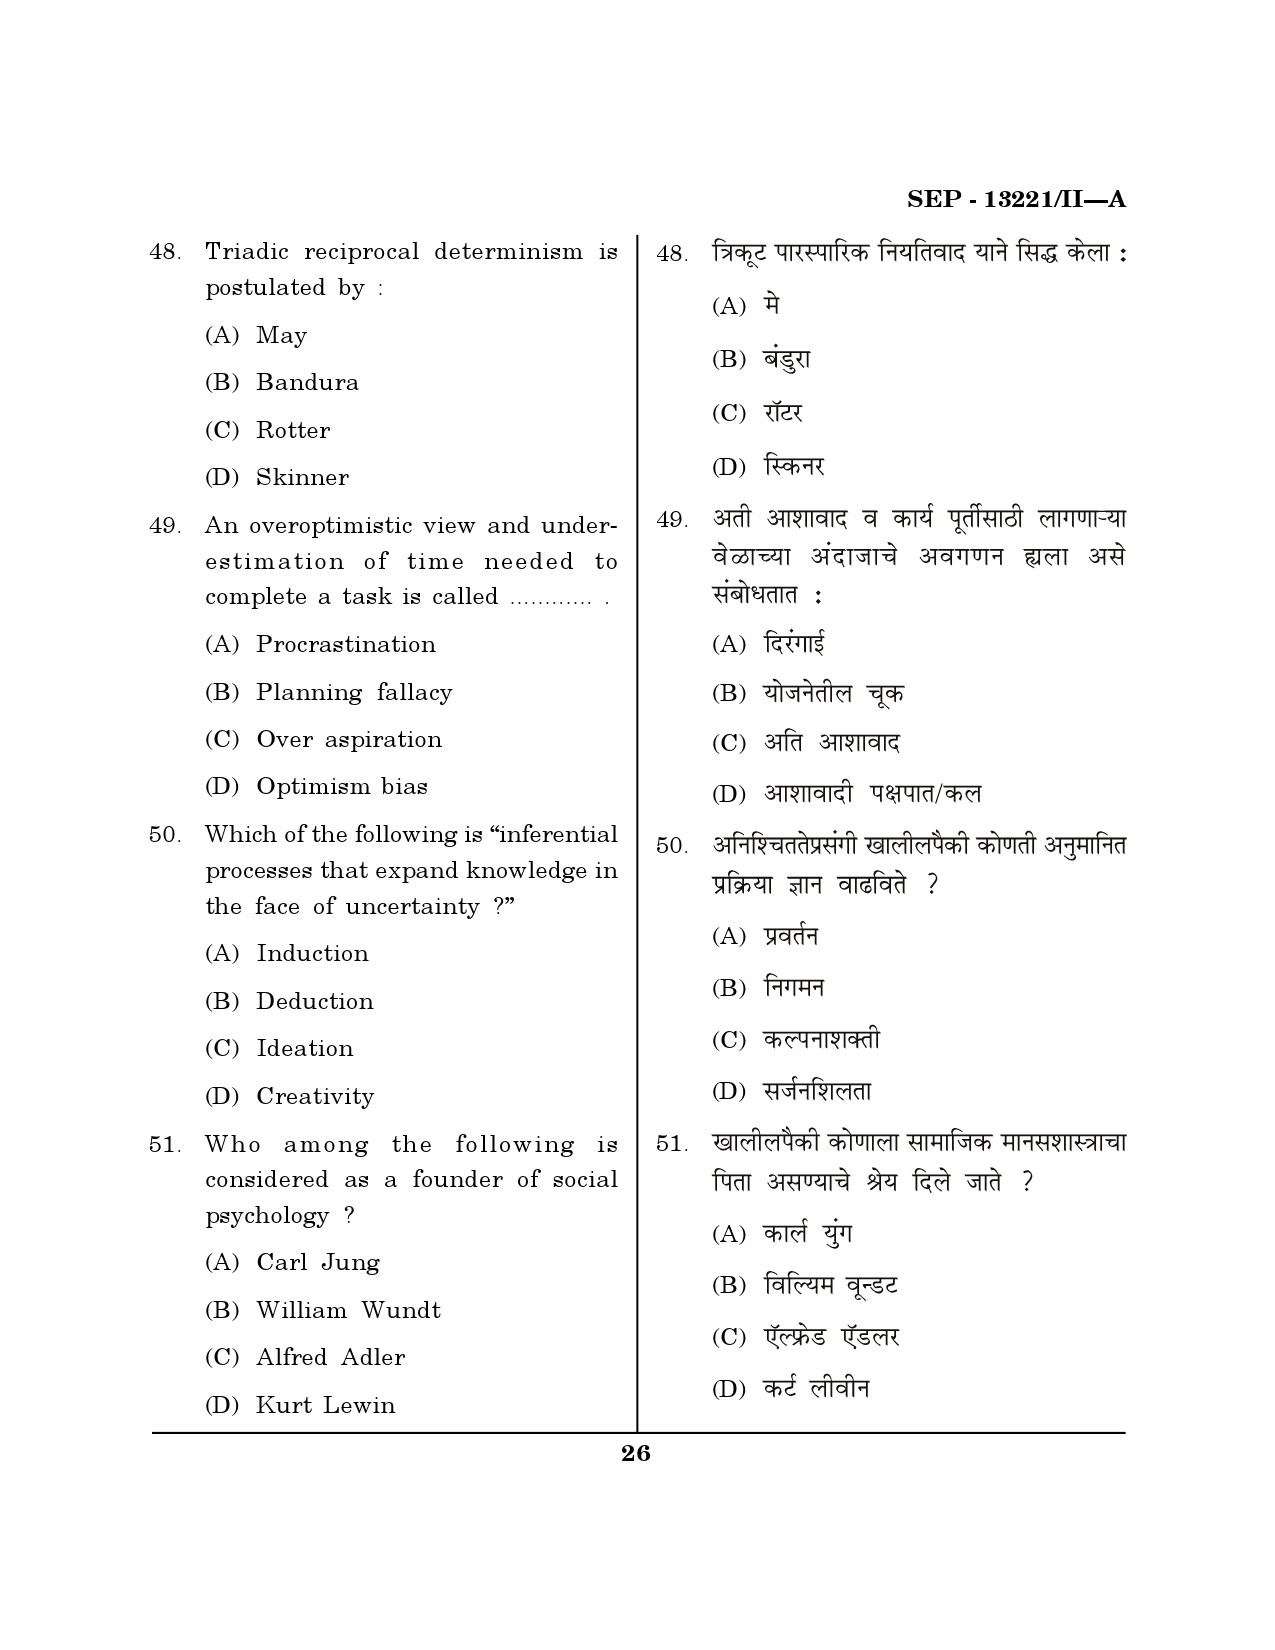 Maharashtra SET Psychology Exam Question Paper September 2021 25